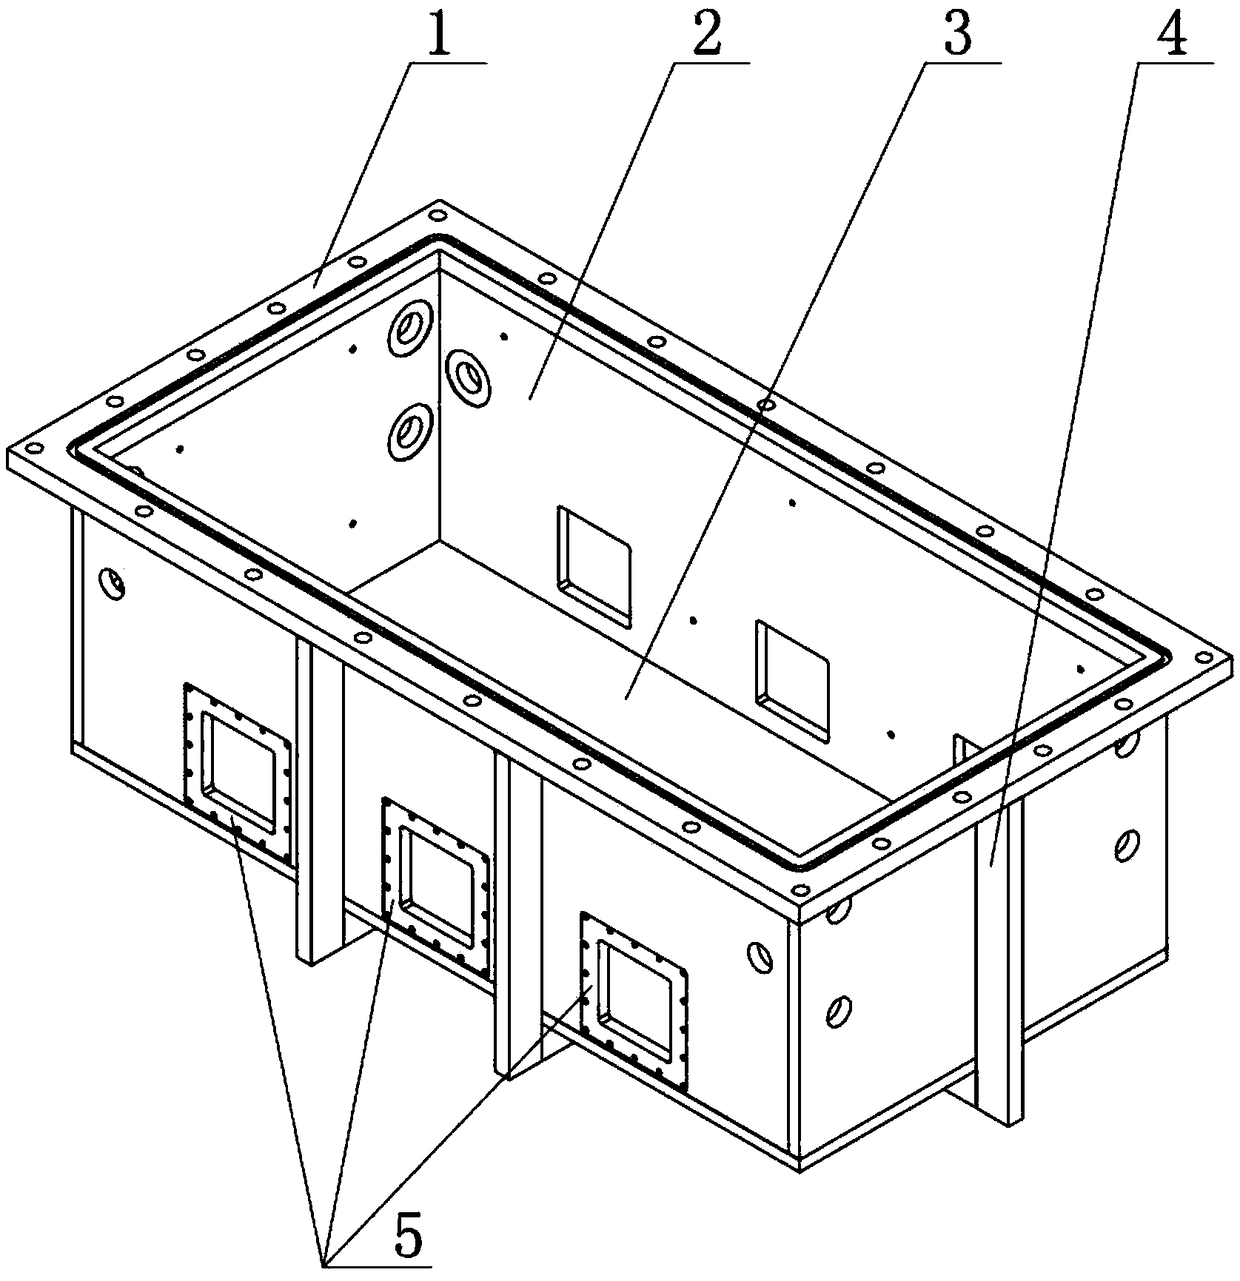 A bin structure for a coating machine